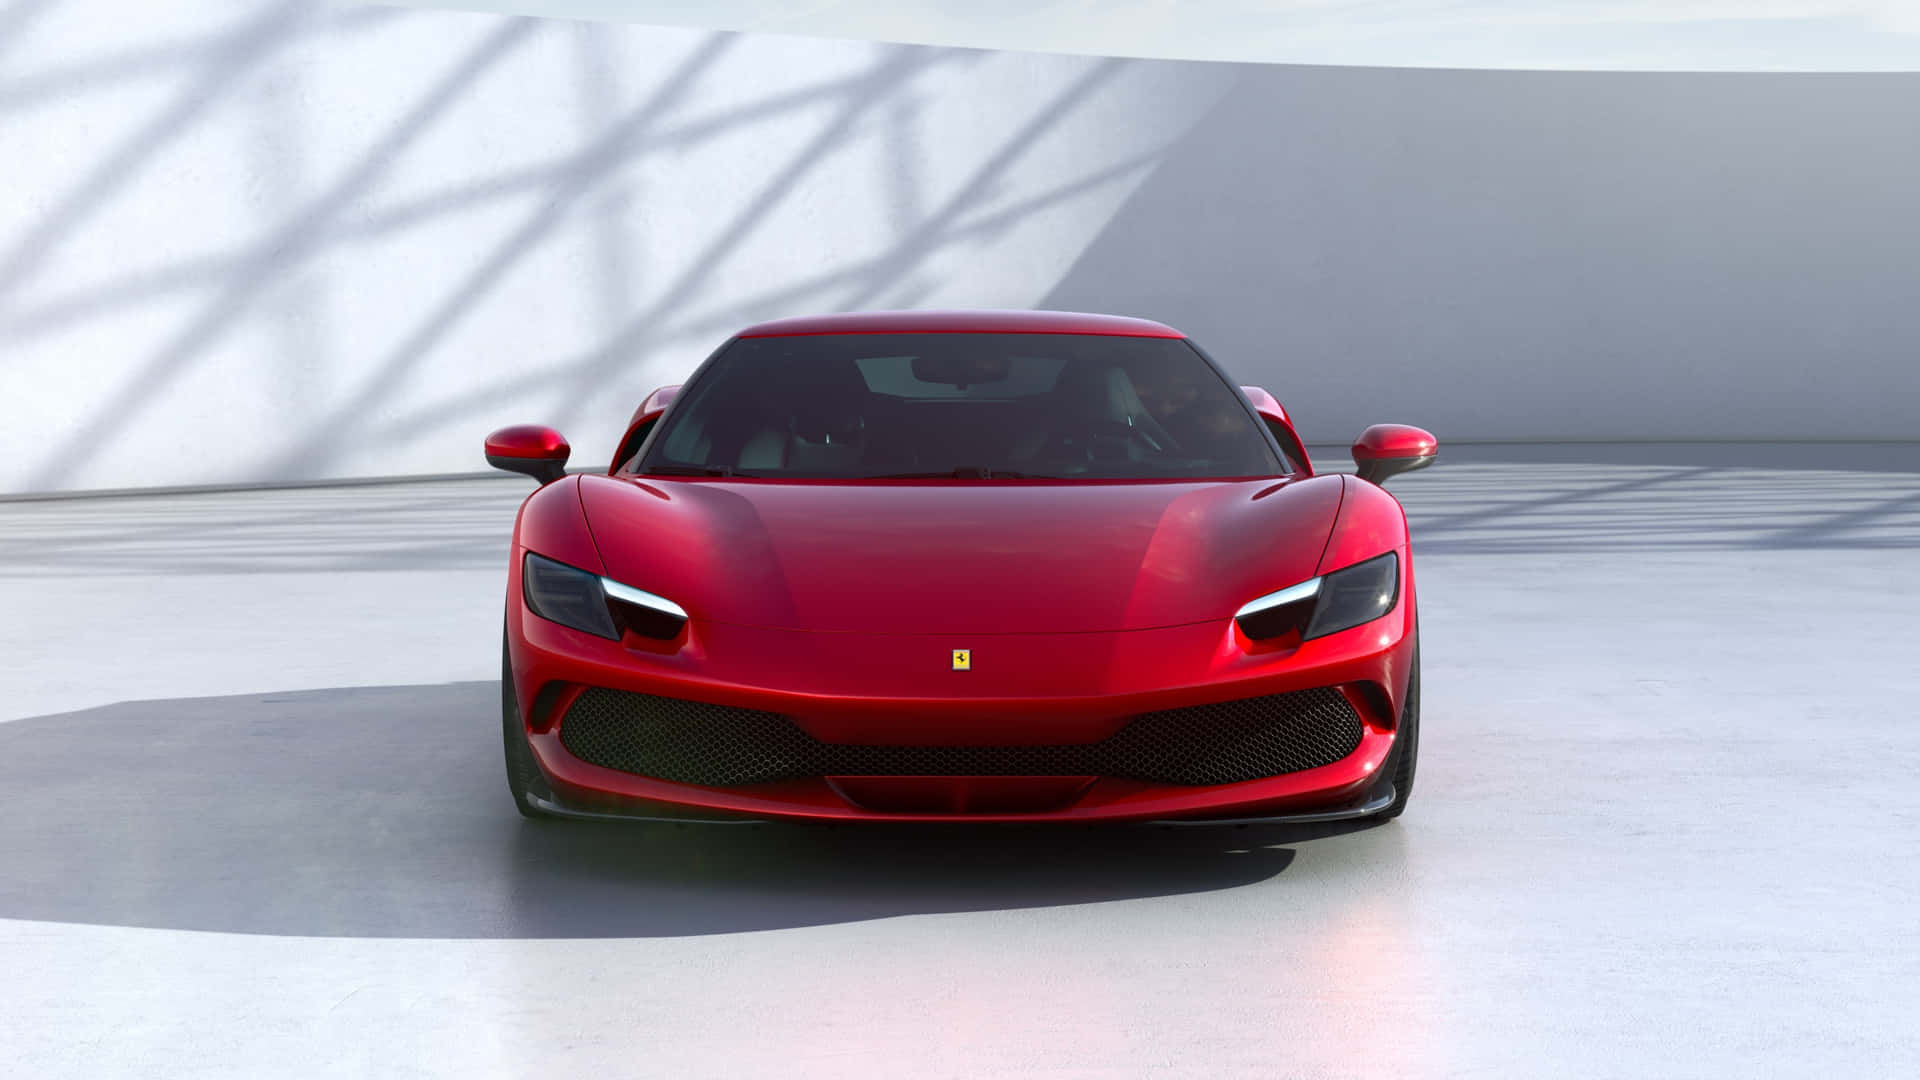 Enjoy the Ride - Cool Ferrari Cars Wallpaper